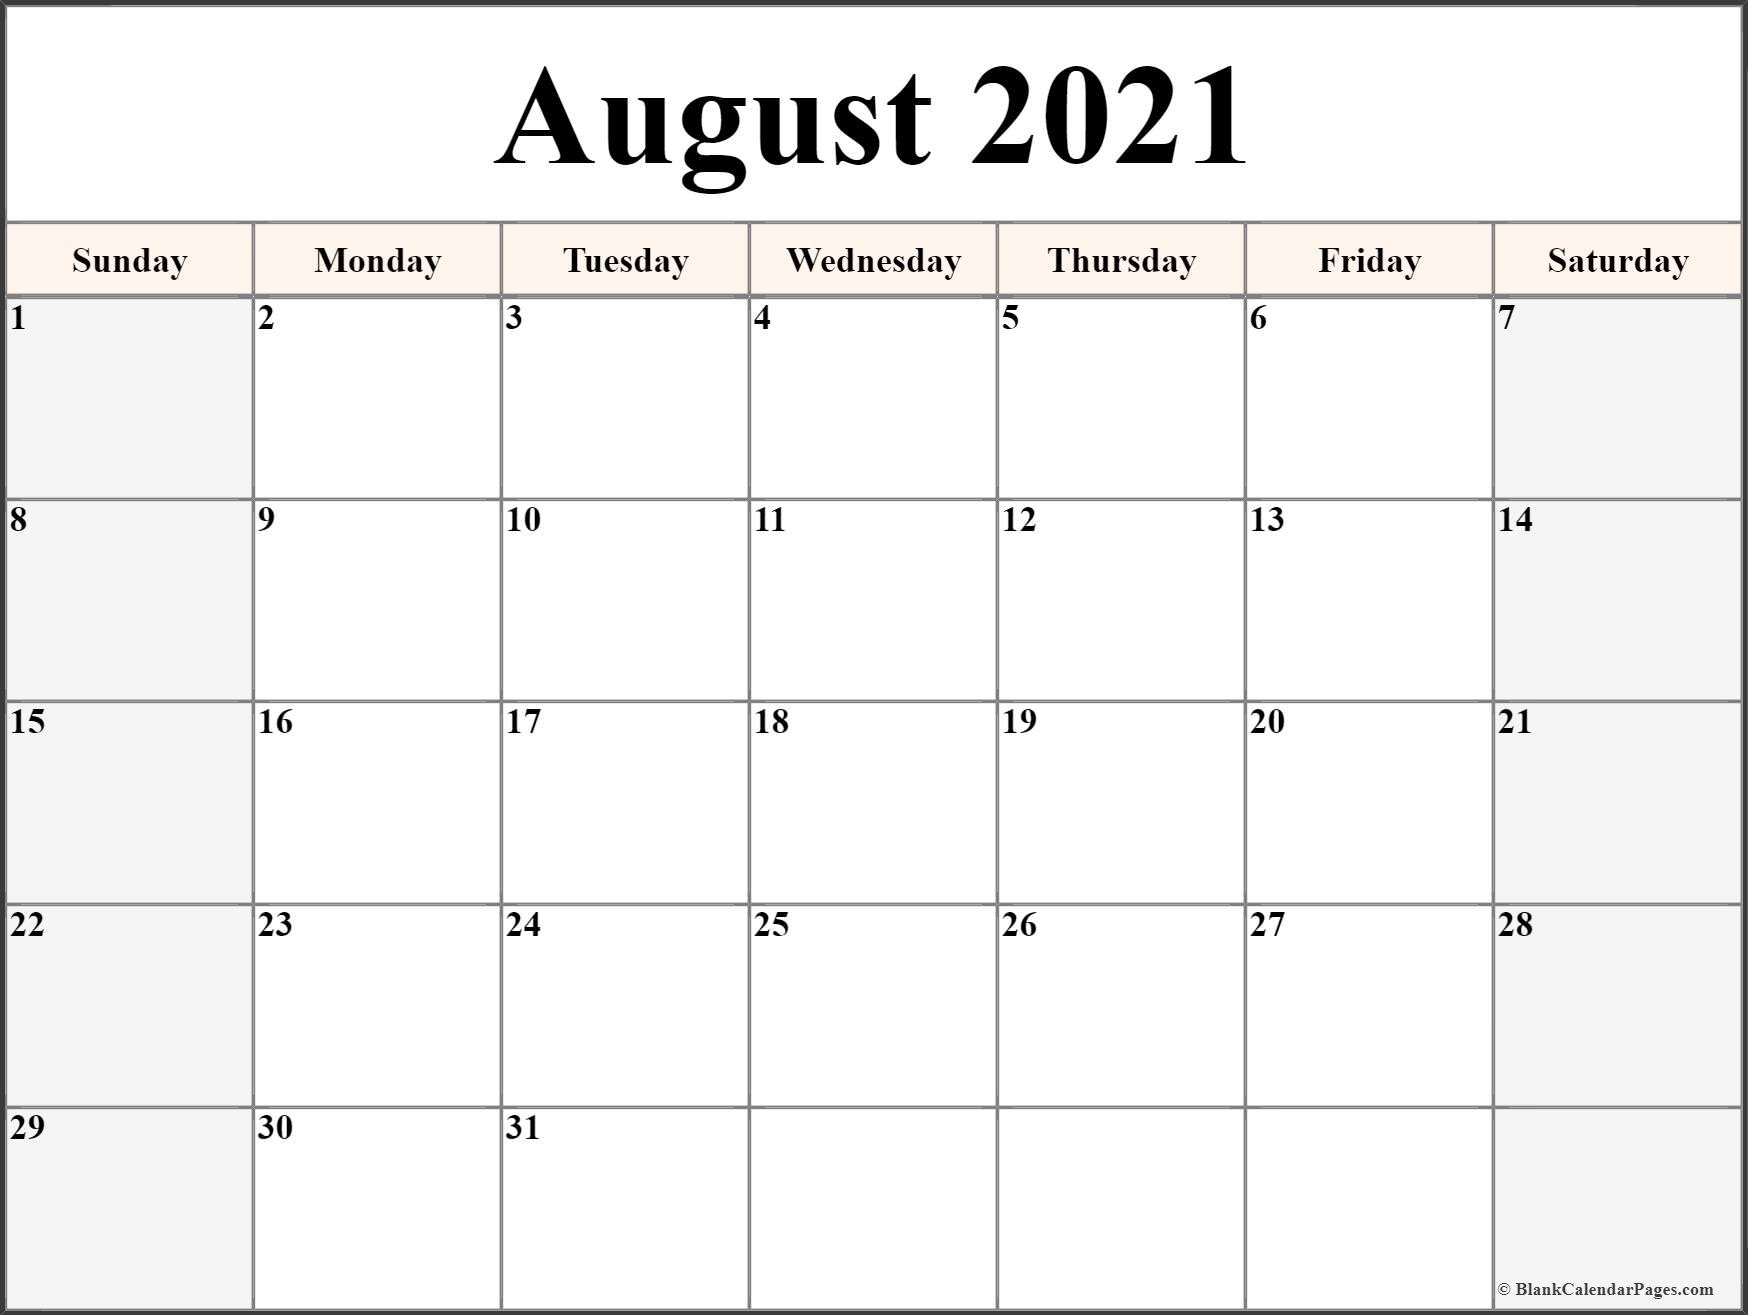 August 2021 Calendar | Free Printable Calendar Free Printable August 2021 Calendar With Holidays